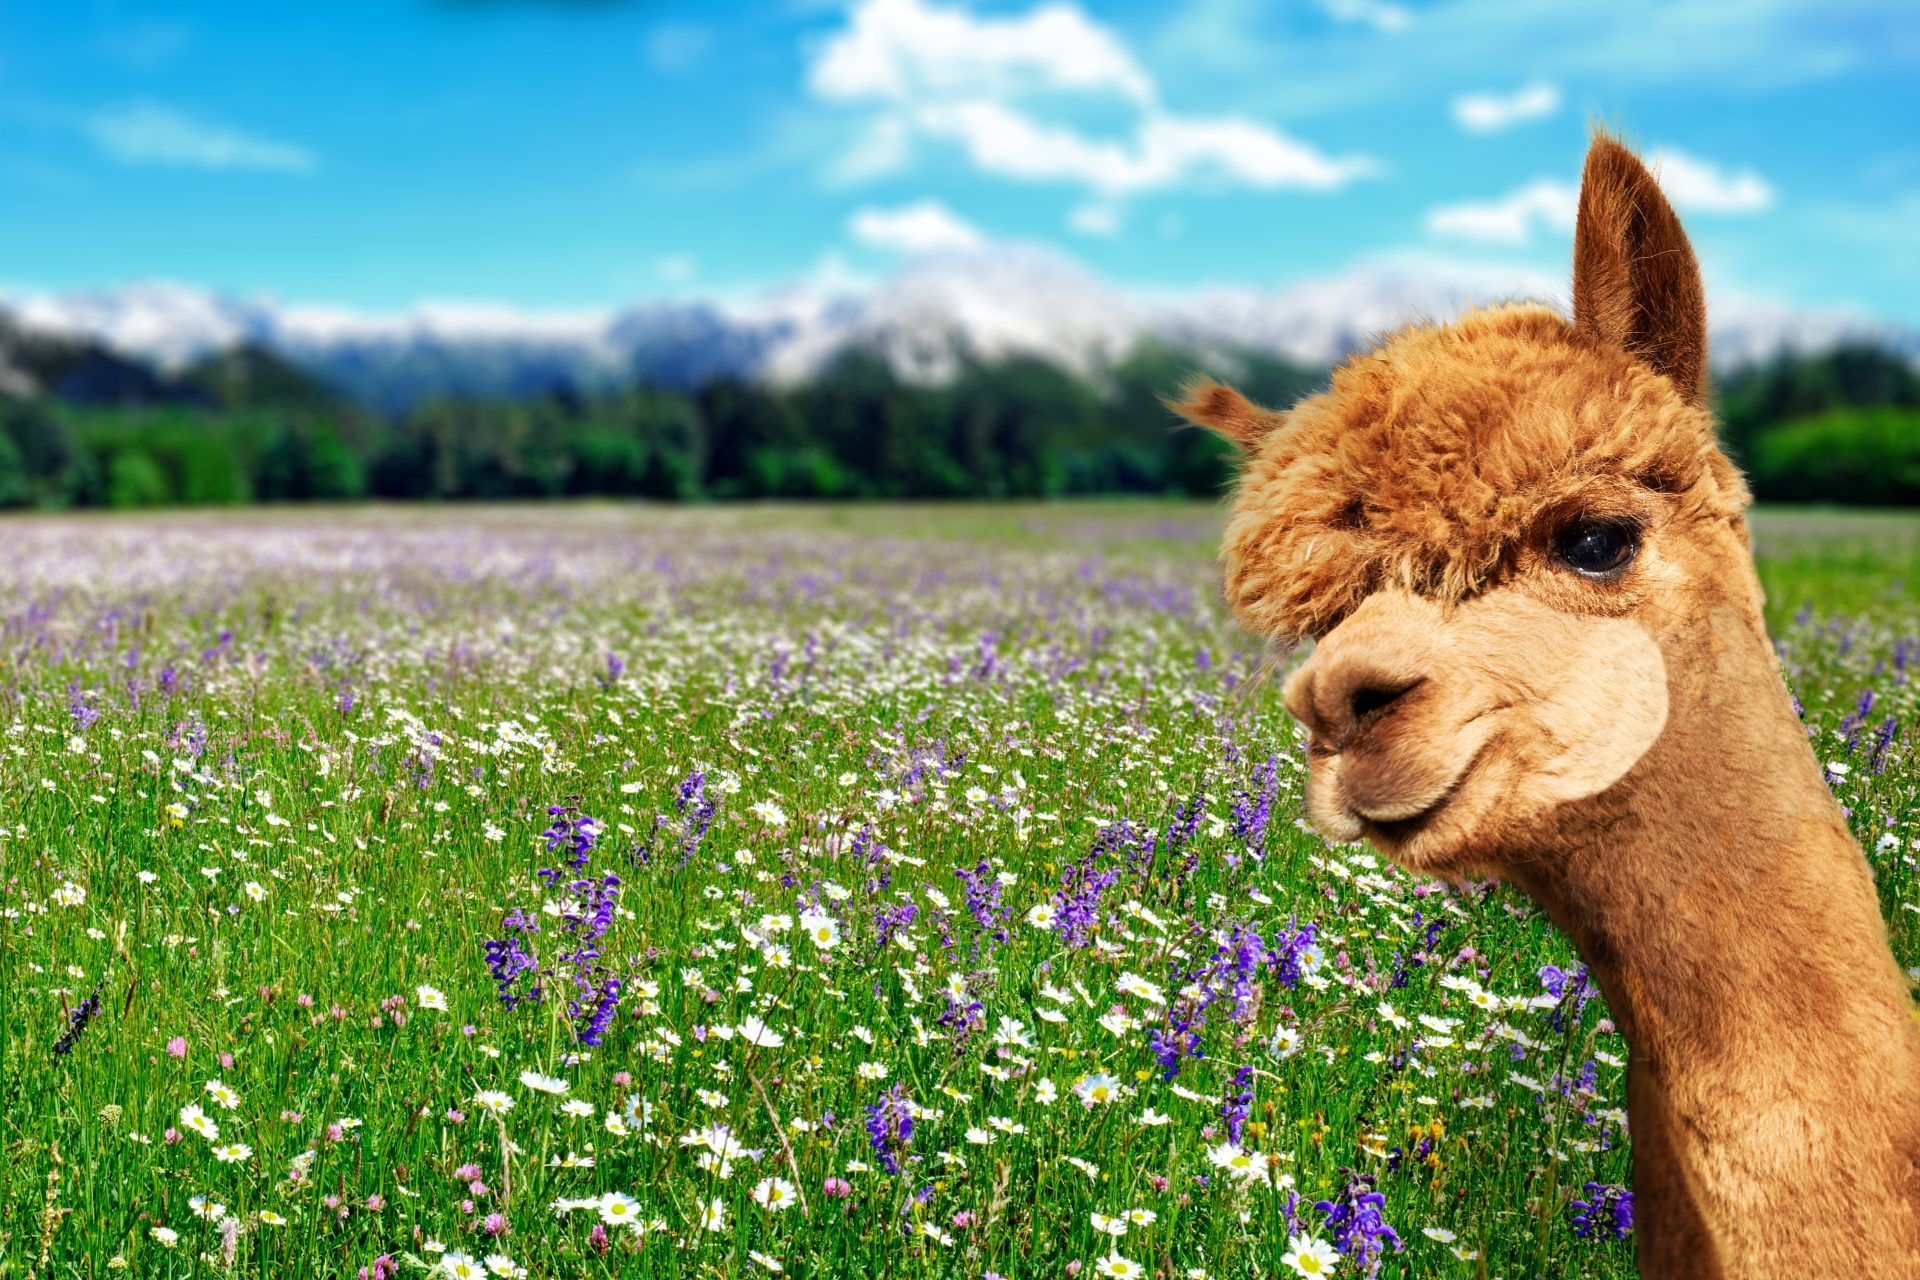 40 Adorable Alpaca Photos to Make You Smile | Reader's Digest